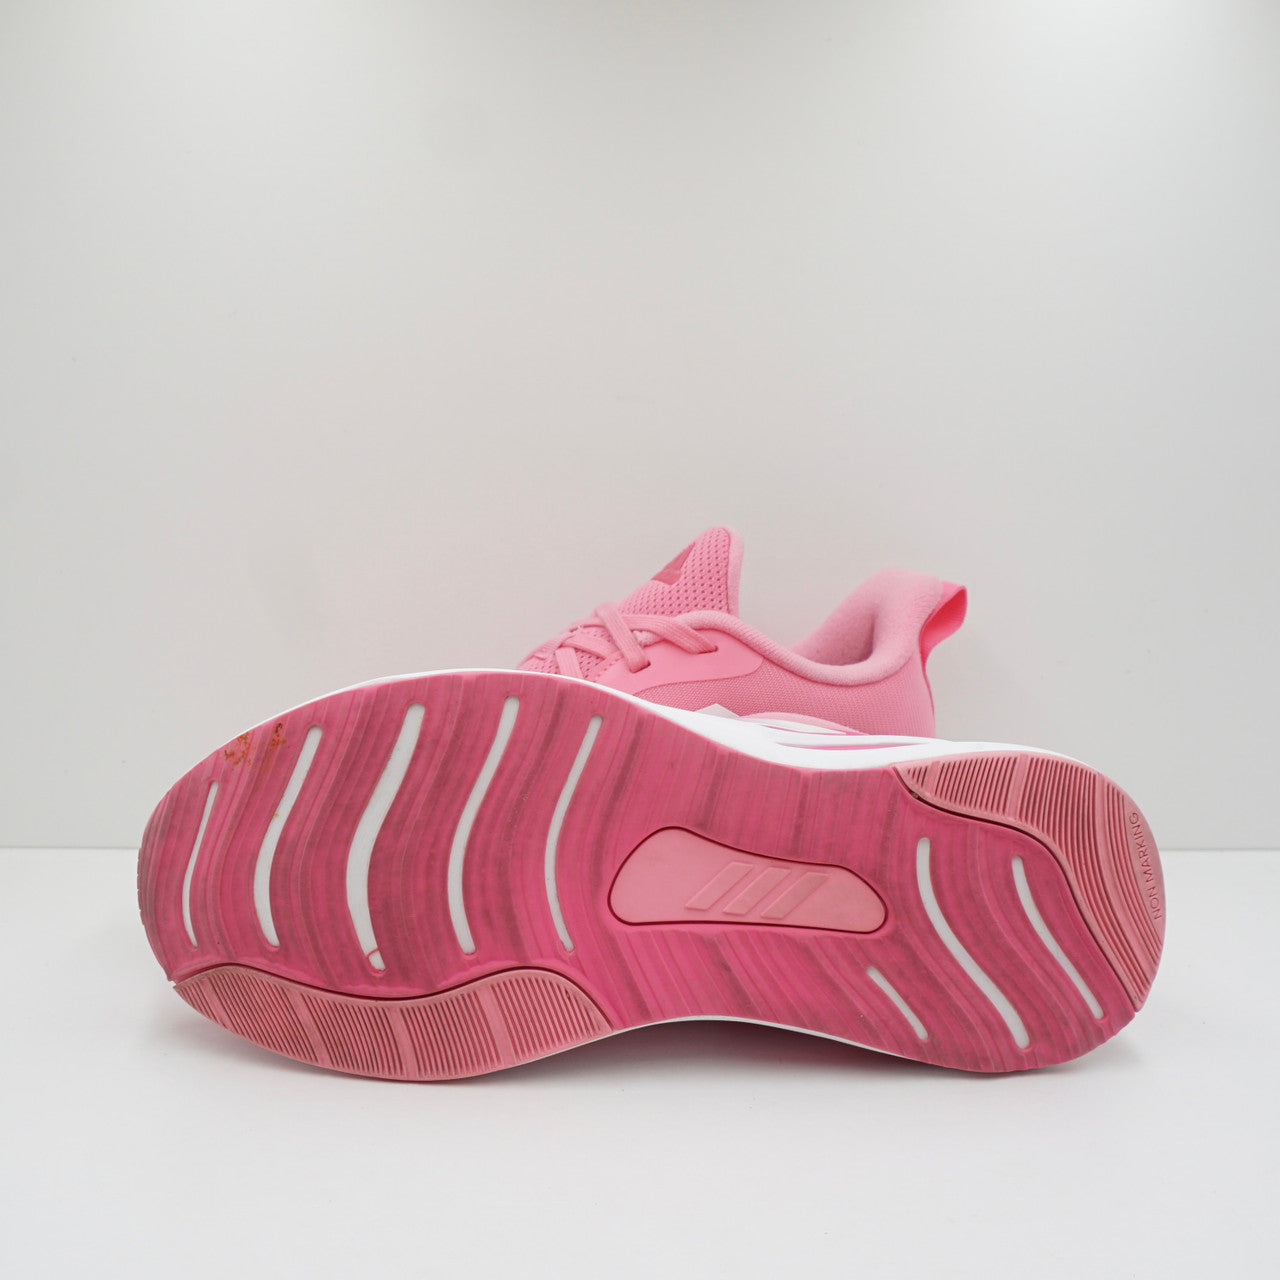 Adidas FortaRun Pink